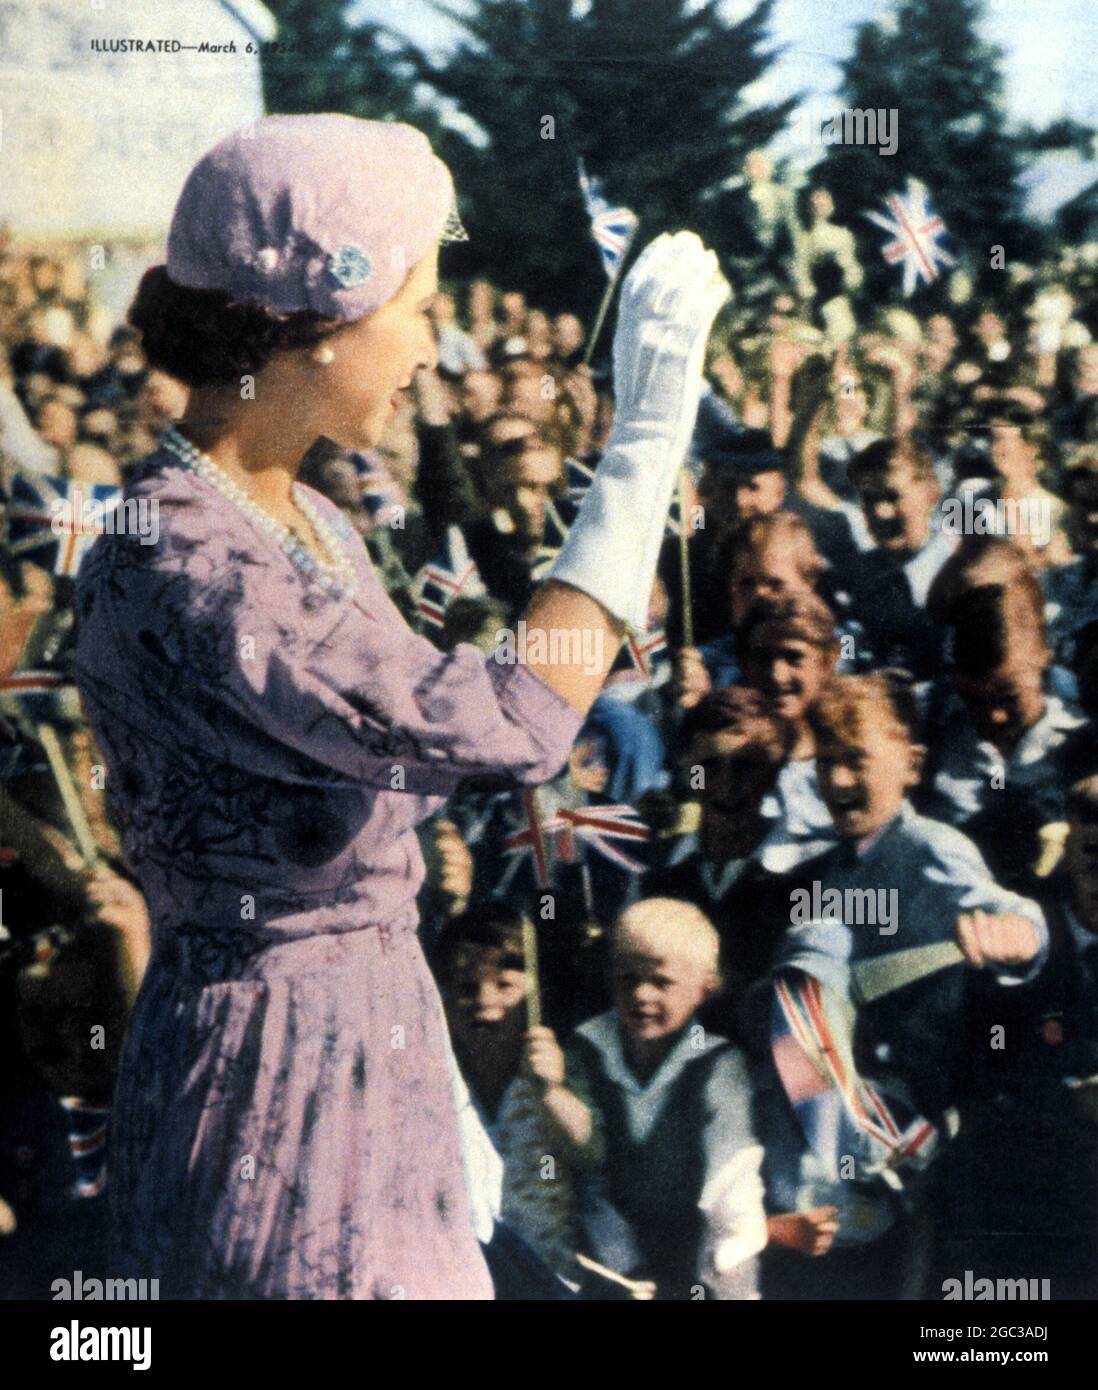 Queen Elizabeth II (Elizabeth Alexandra Mary Windsor born 21st April 1926) on royal tour in New Zealand in 1954 - ©TopFoto Stock Photo